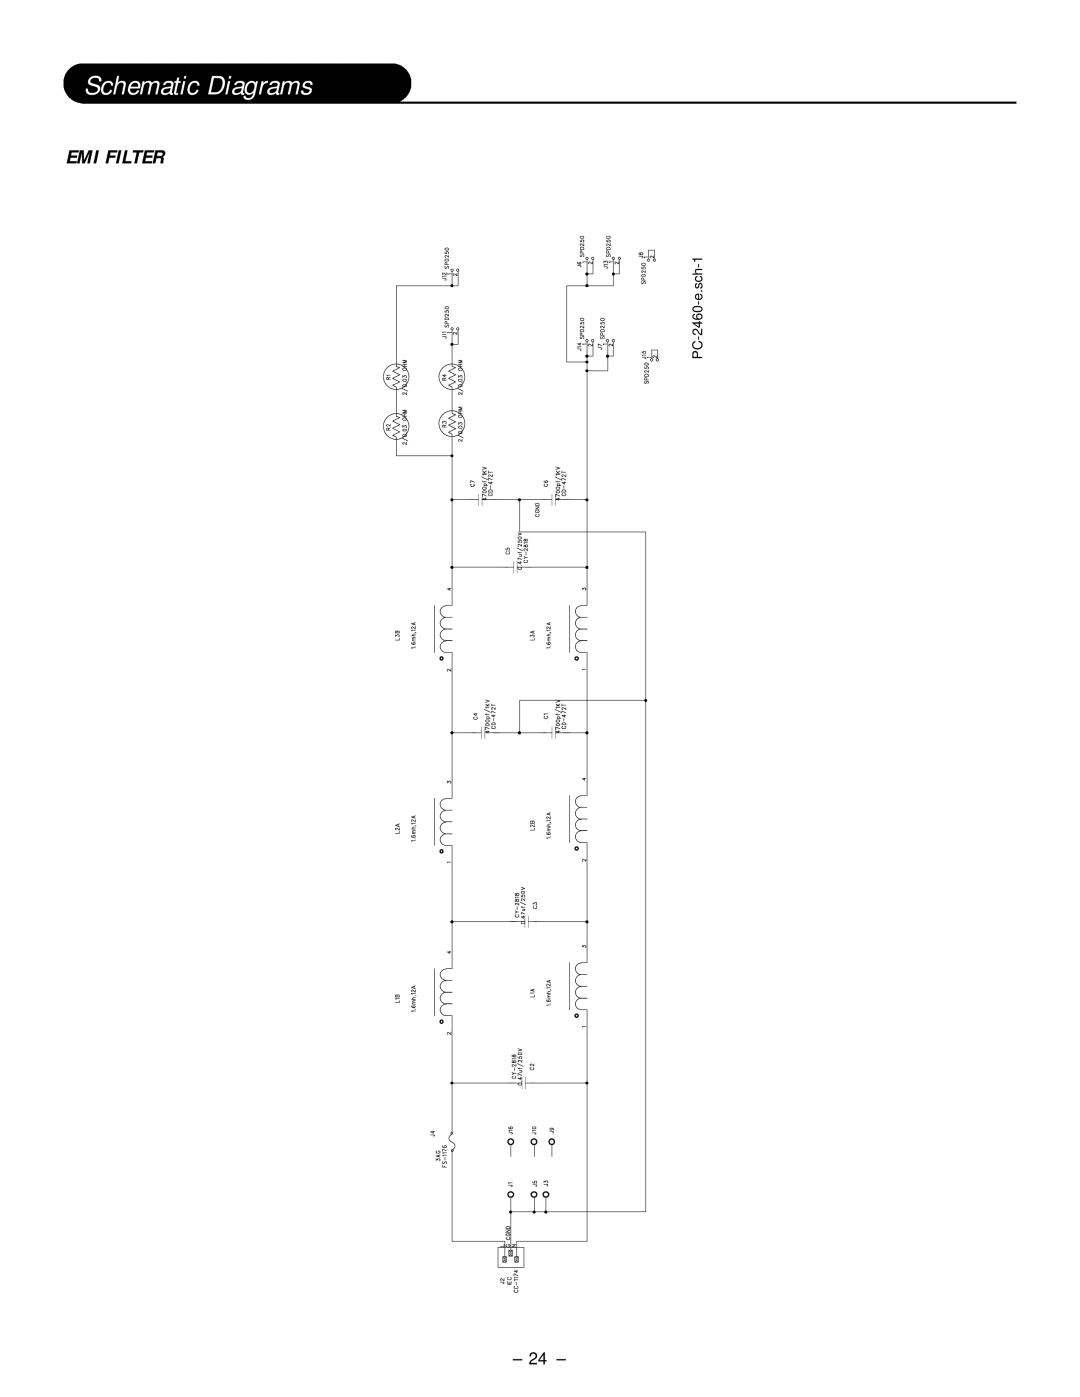 Hafler SR2300, SR2600 owner manual Schematic Diagrams, Emi Filter, PC-2460-e.sch-1 